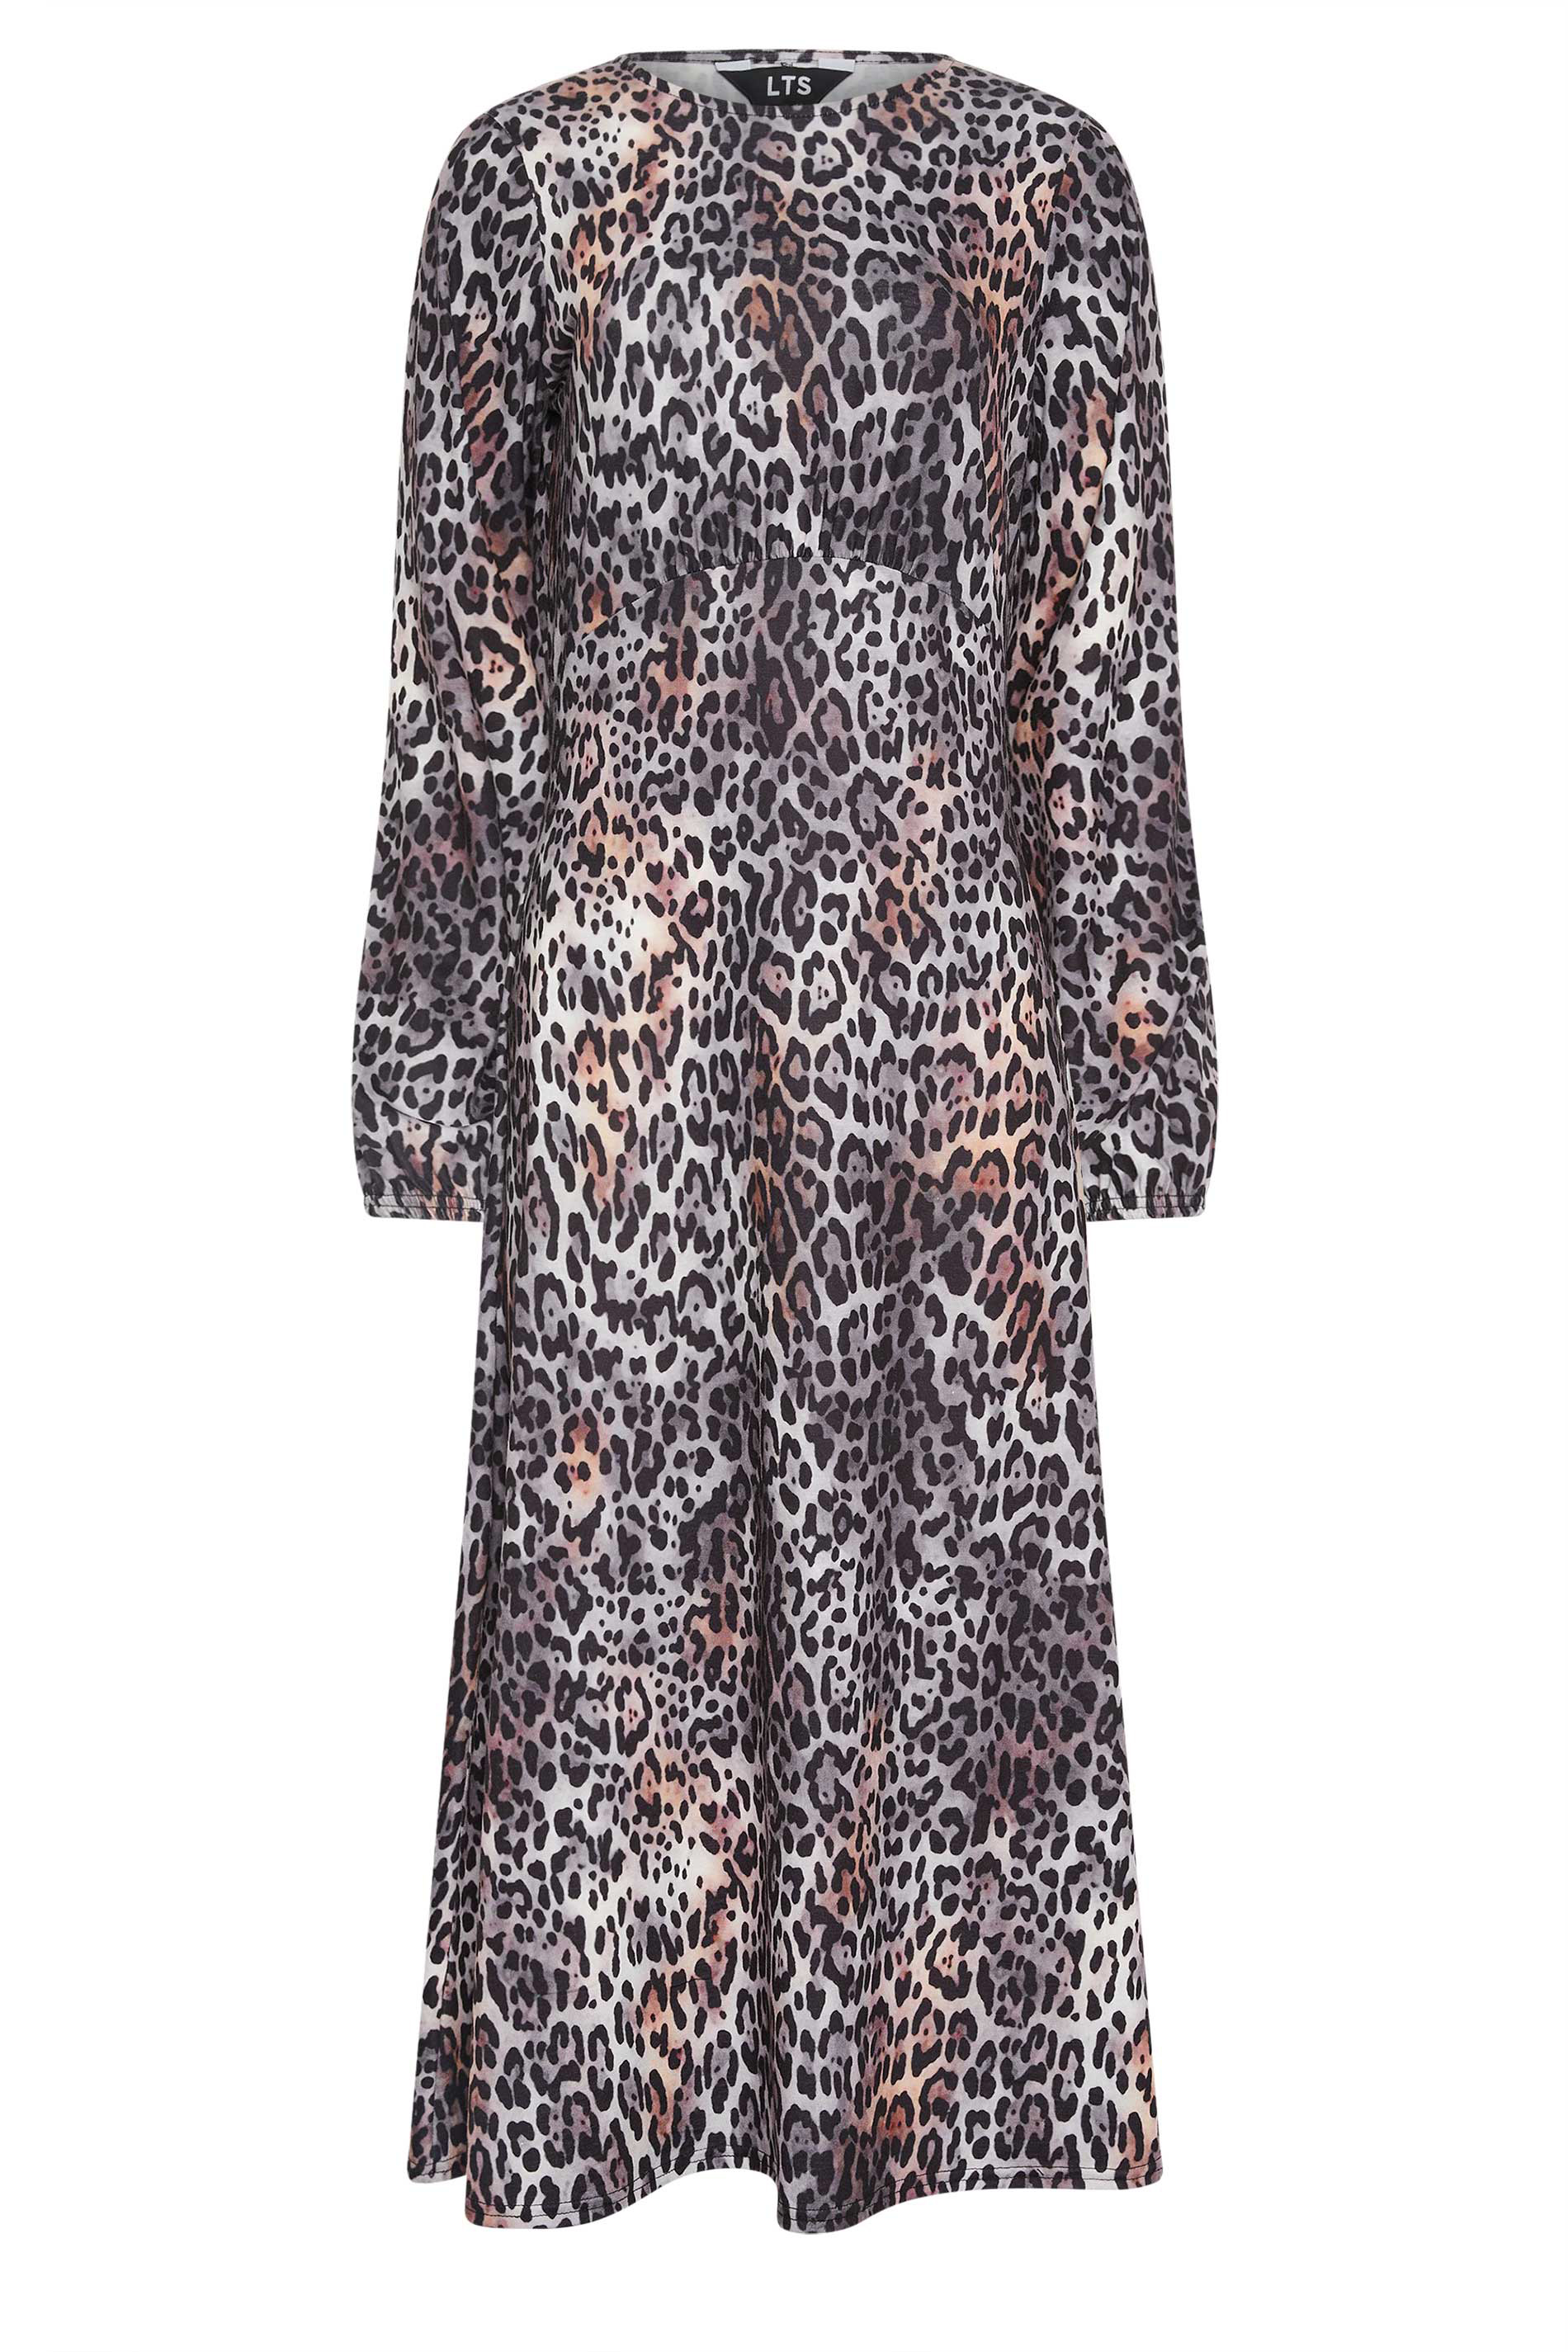 LTS Tall Women's Grey Leopard Print Tea Dress | Long Tall Sally